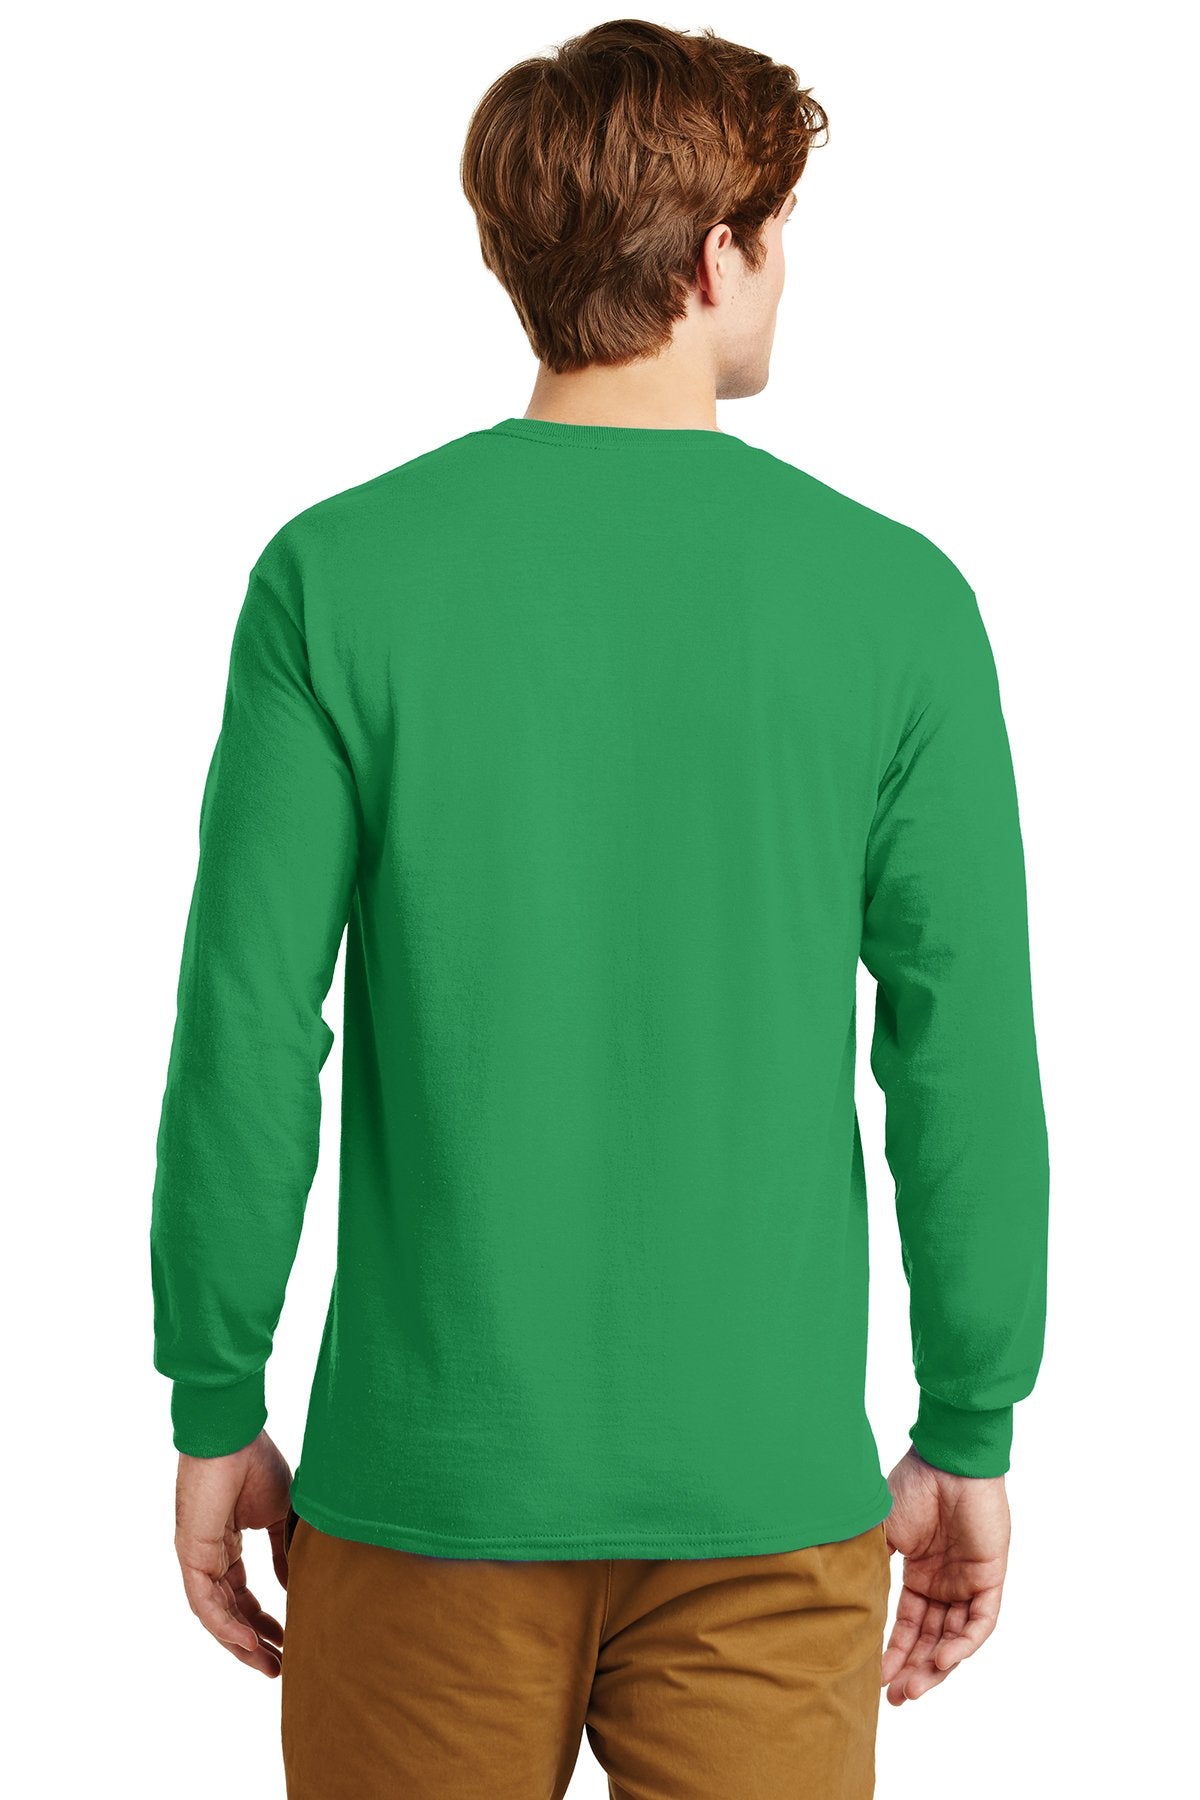 Download Gildan Ultra Cotton Long Sleeve T Shirt in Irish Green ...